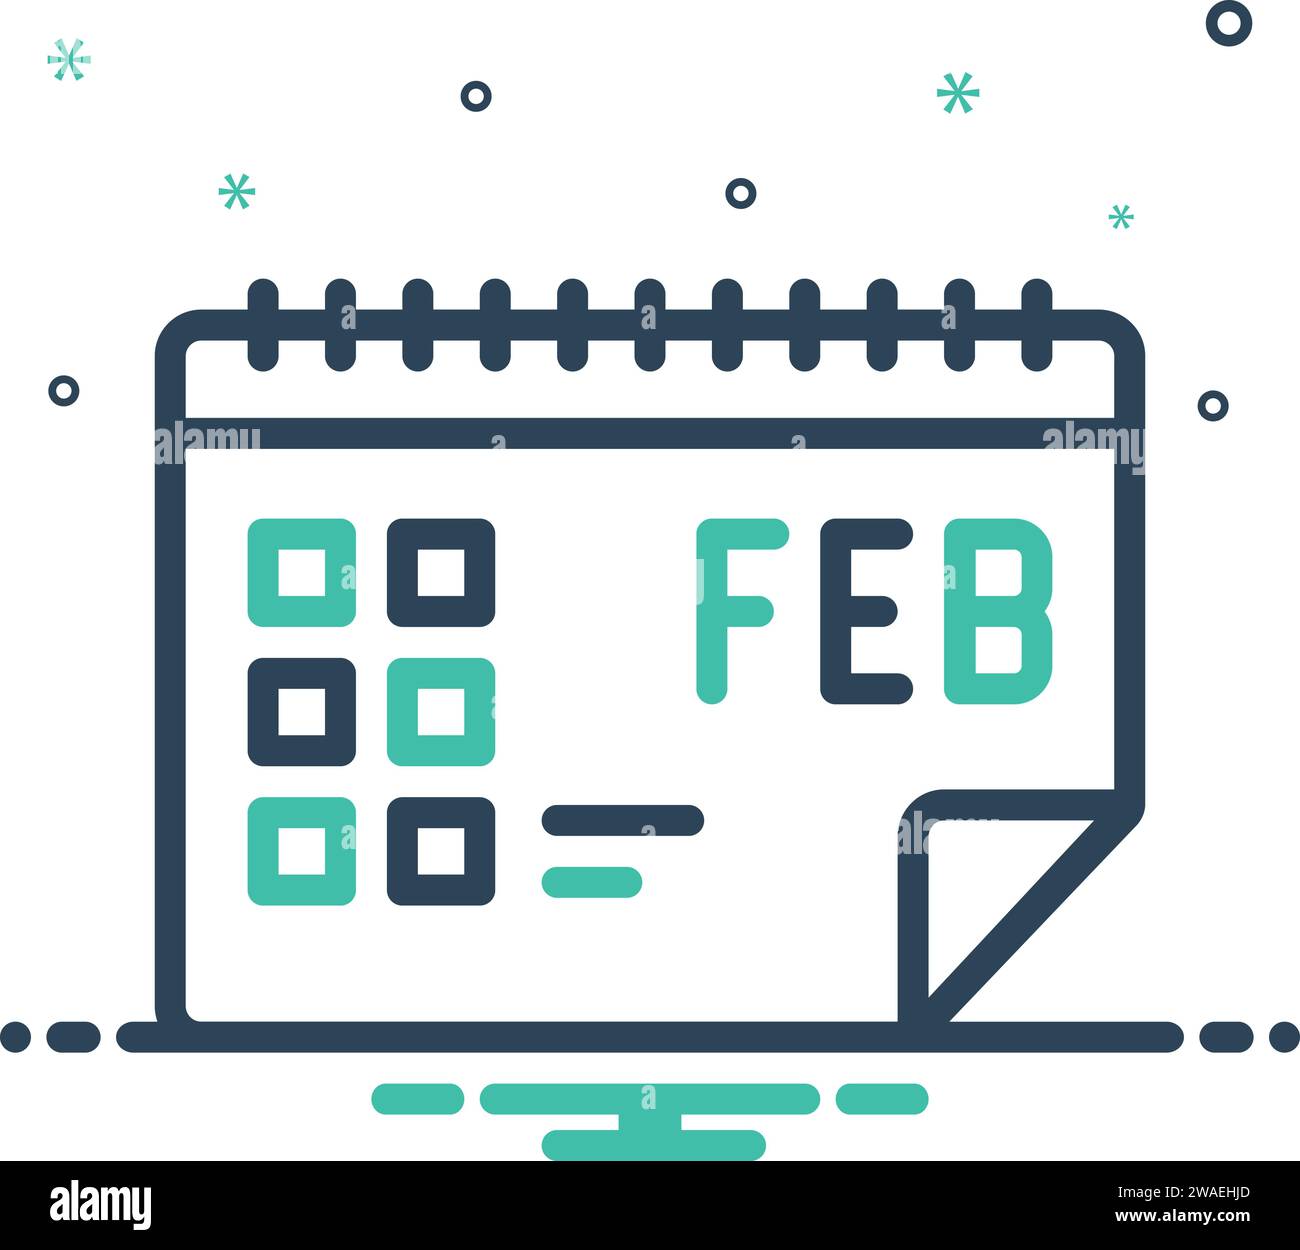 Feb month calendar Stock Vector Images - Alamy